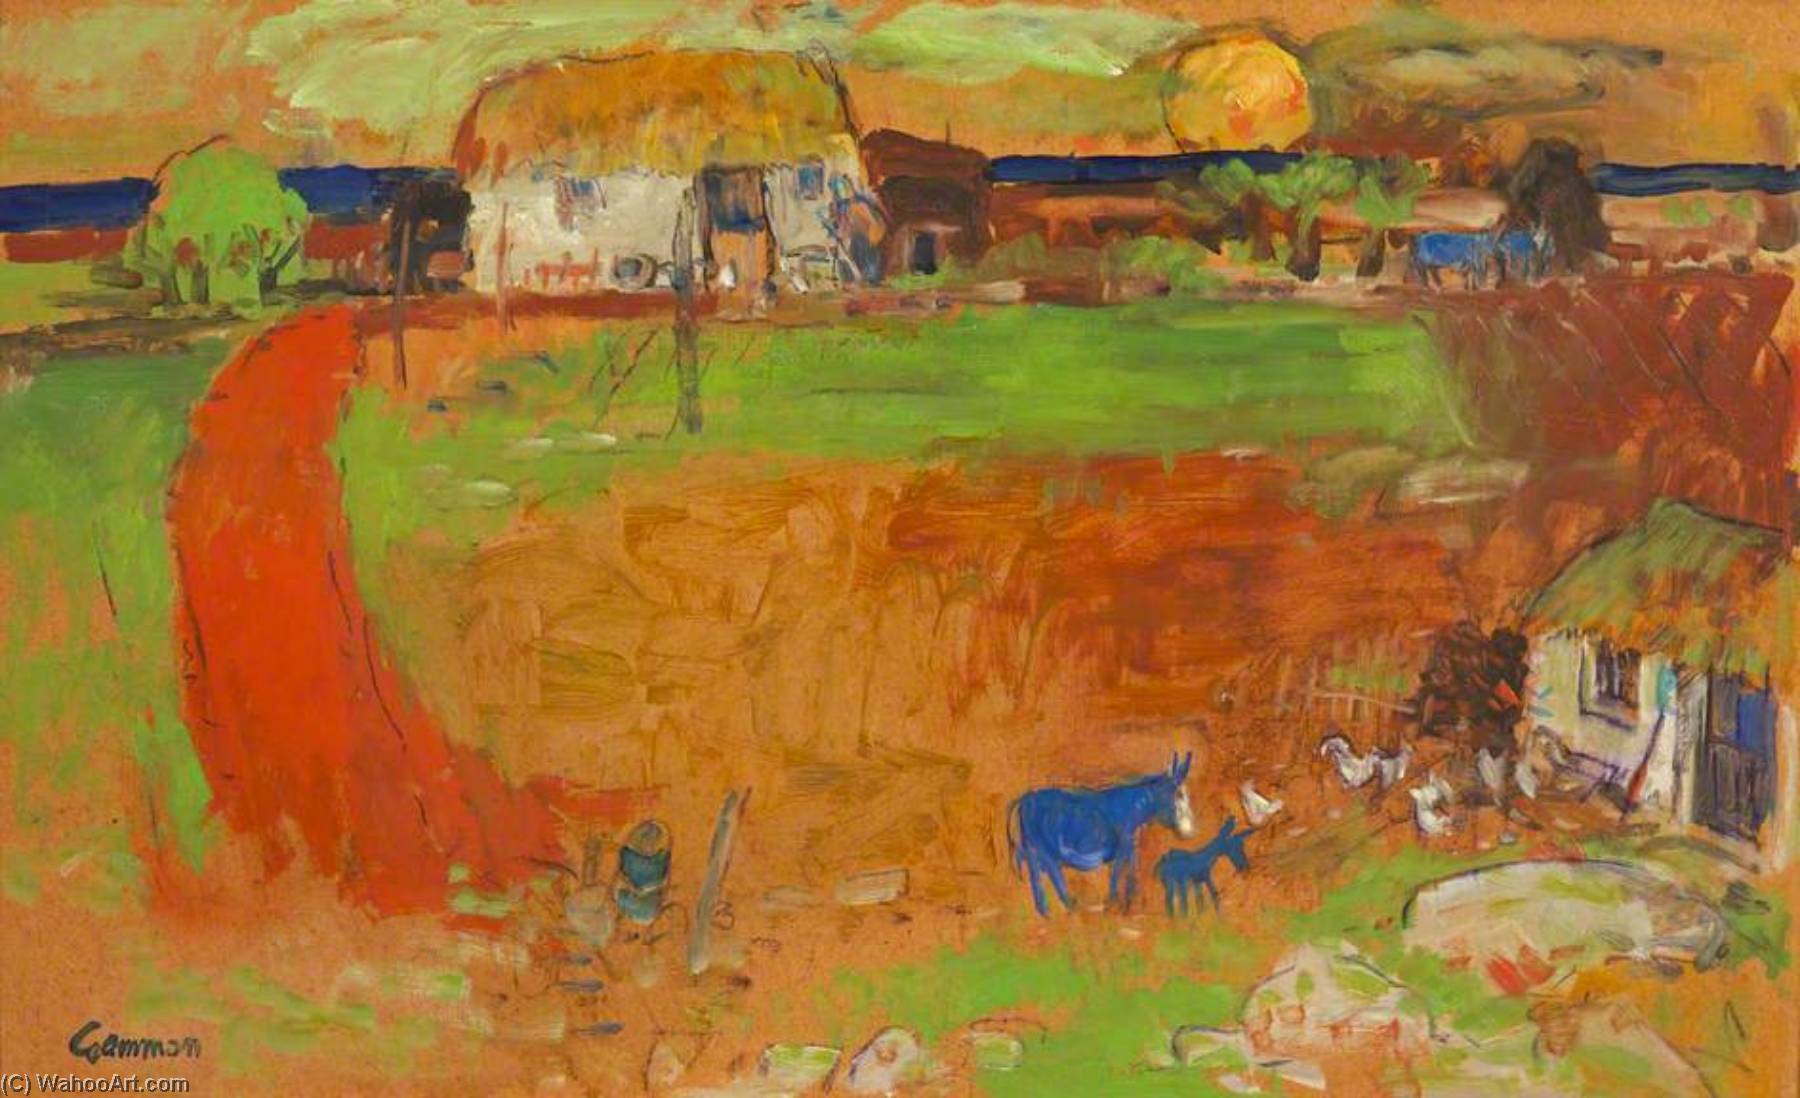 Landscape with Blue Donkey by Reginald Gammon (1921-2005) Reginald Gammon | ArtsDot.com